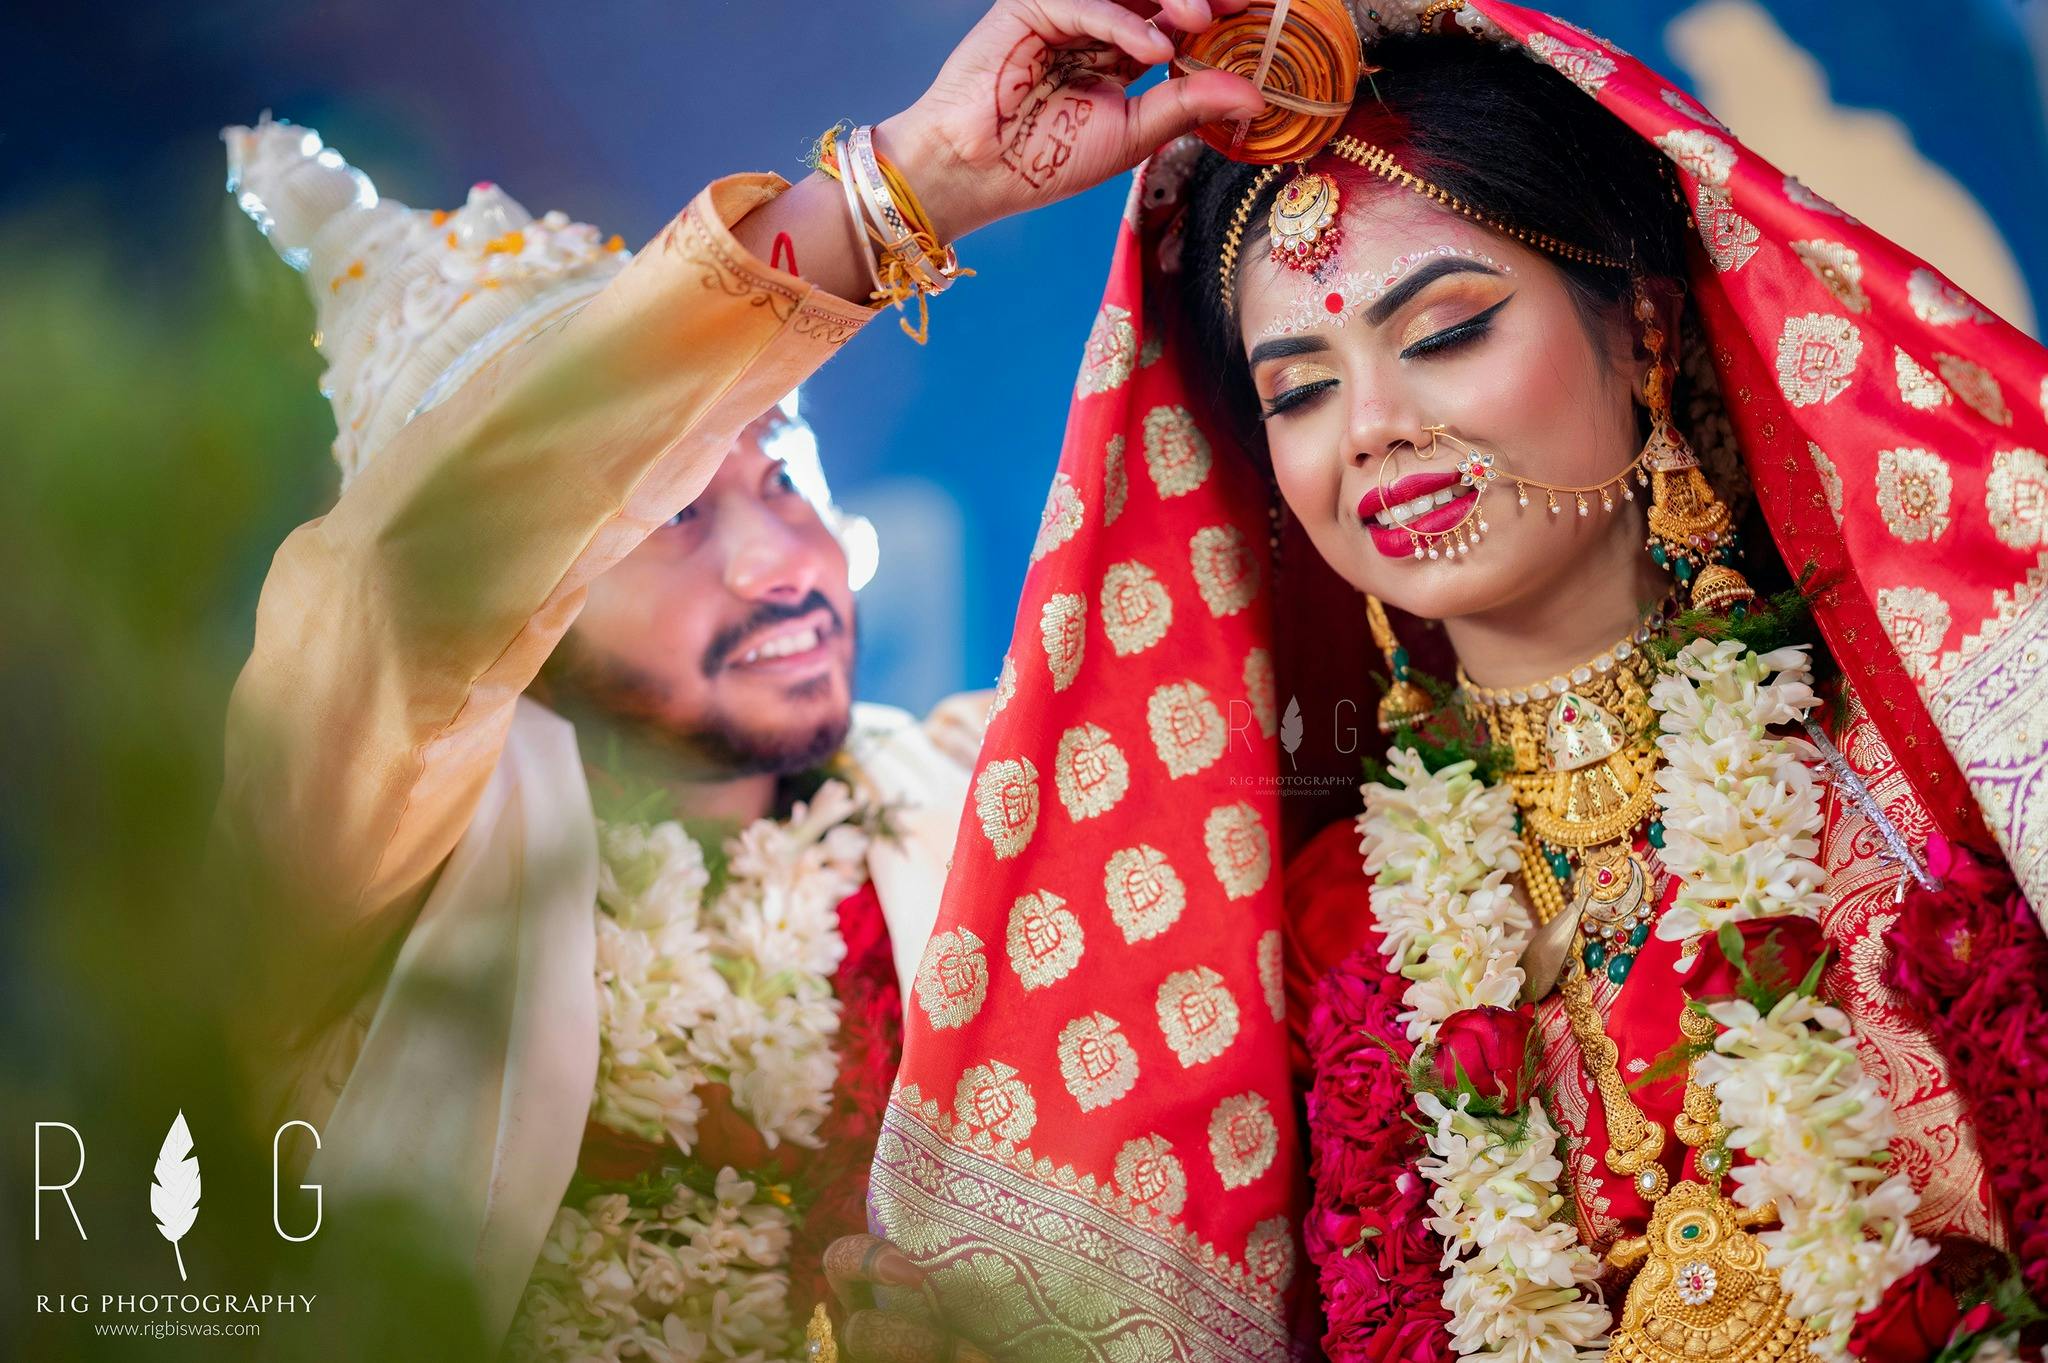 Designing a beautiful Indian wedding album - Photo Book Design